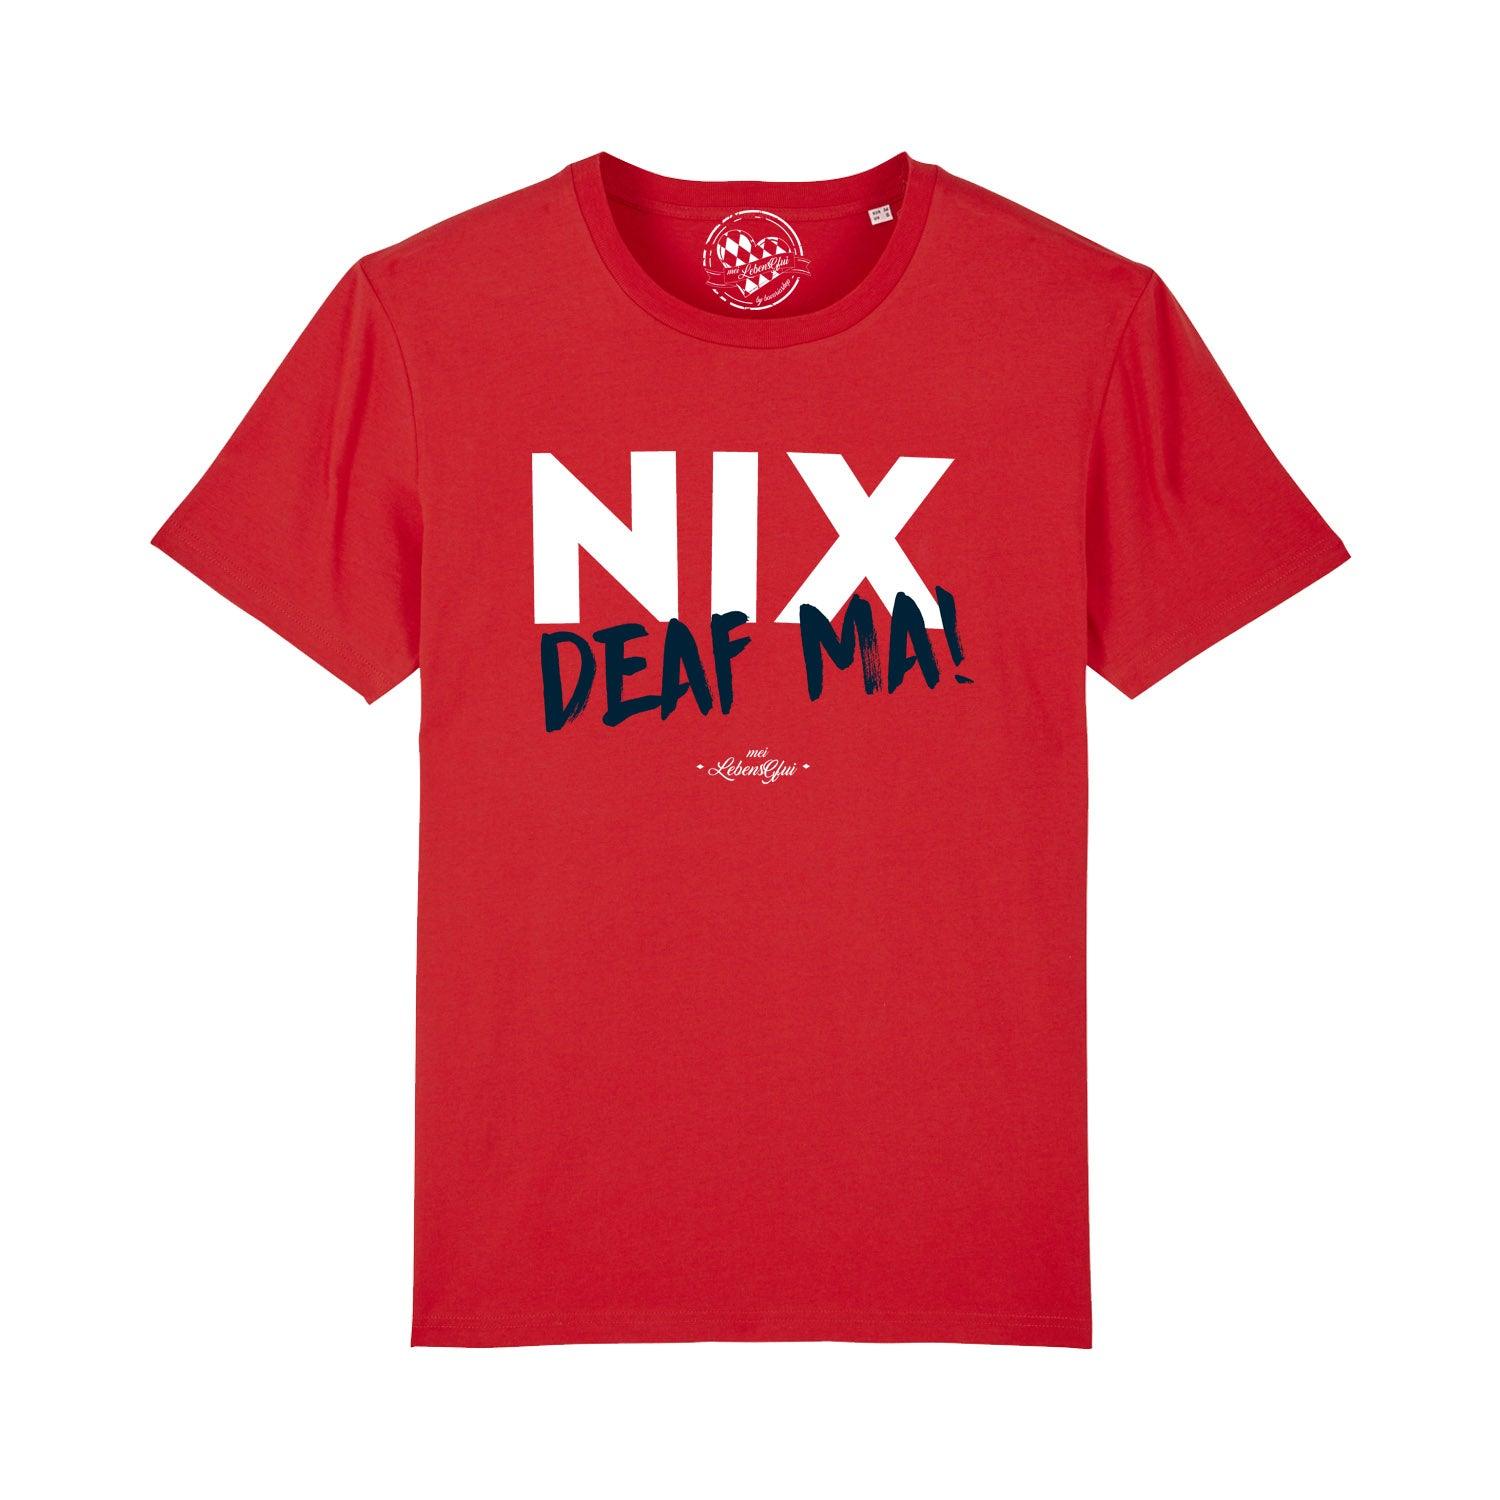 Herren T-Shirt "Nix deaf ma" - bavariashop - mei LebensGfui